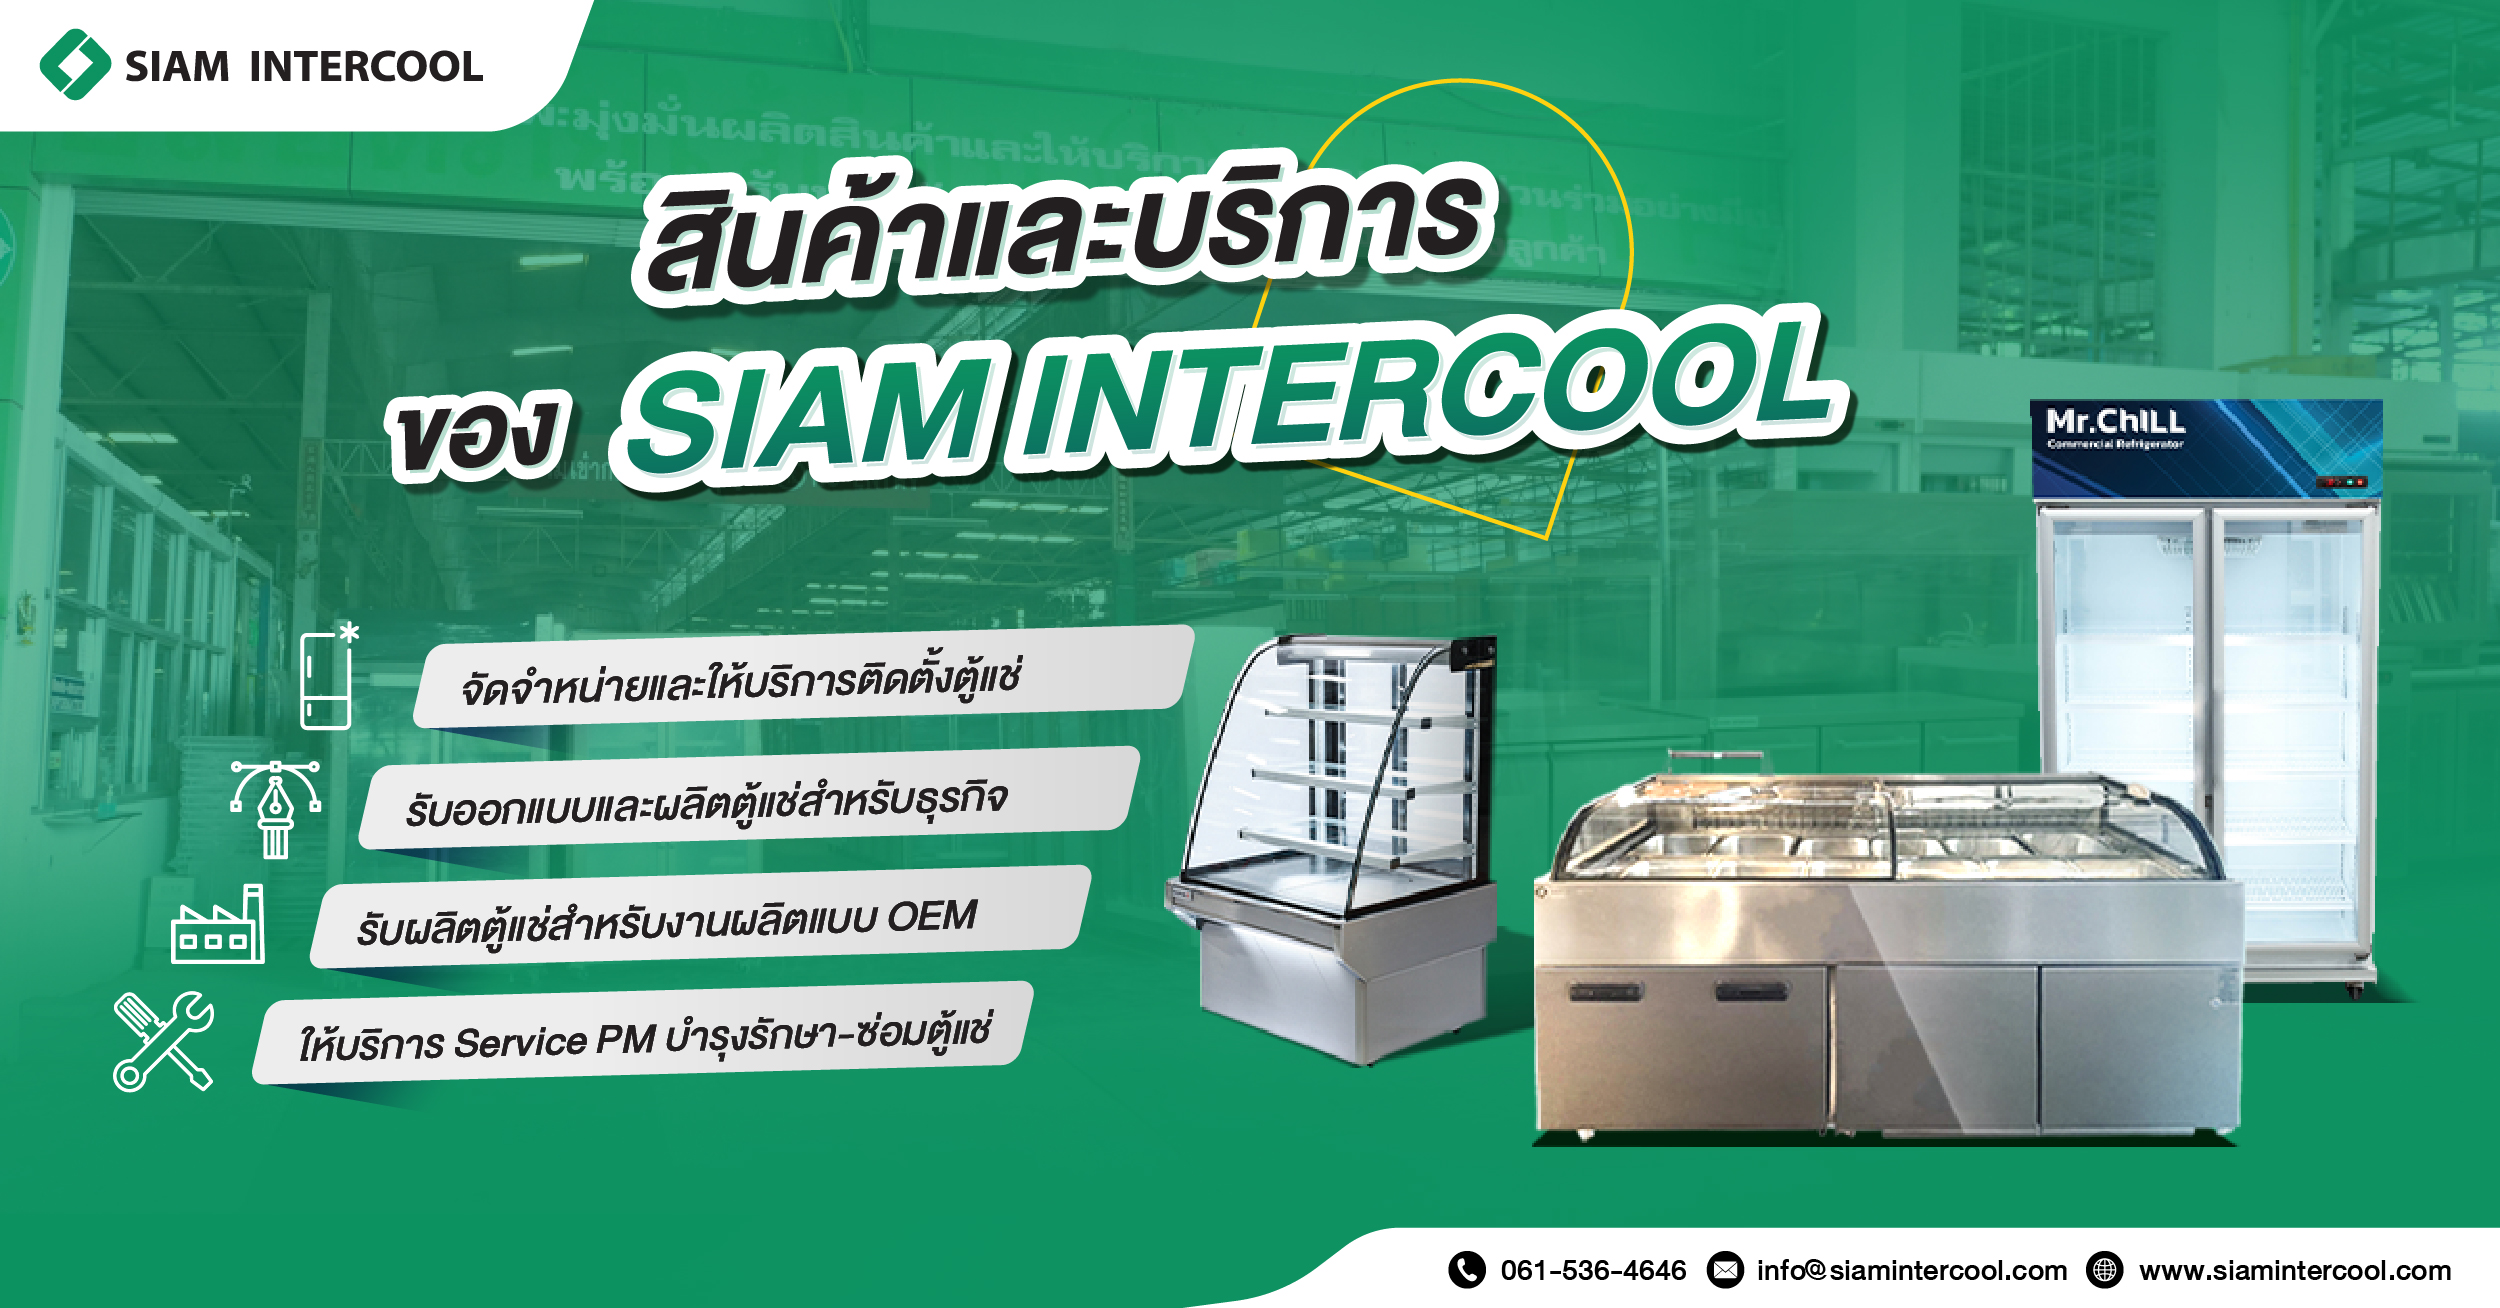 SIAM INTERCOOL โรงงานผลิตตู้แช่ชั้นนำของประเทศไทย ให้บริการด้านตู้แช่แบบครบวงจร โดยใช้เทคโนโลยีที่ทันสมัยและผลิตจากวัสดุที่มีคุณภาพสูง เพื่อให้การใช้งานตู้แช่ได้อย่างทนทานและปลอดภัย โดยมุ่งมั่นใส่ใจที่จะให้บริการลูกค้าอย่างดีที่สุด โดยคำนึงถึงคุณภาพ ความคุ้มค่า และความปลอดภัยของสินค้าและบริการจากเรา 